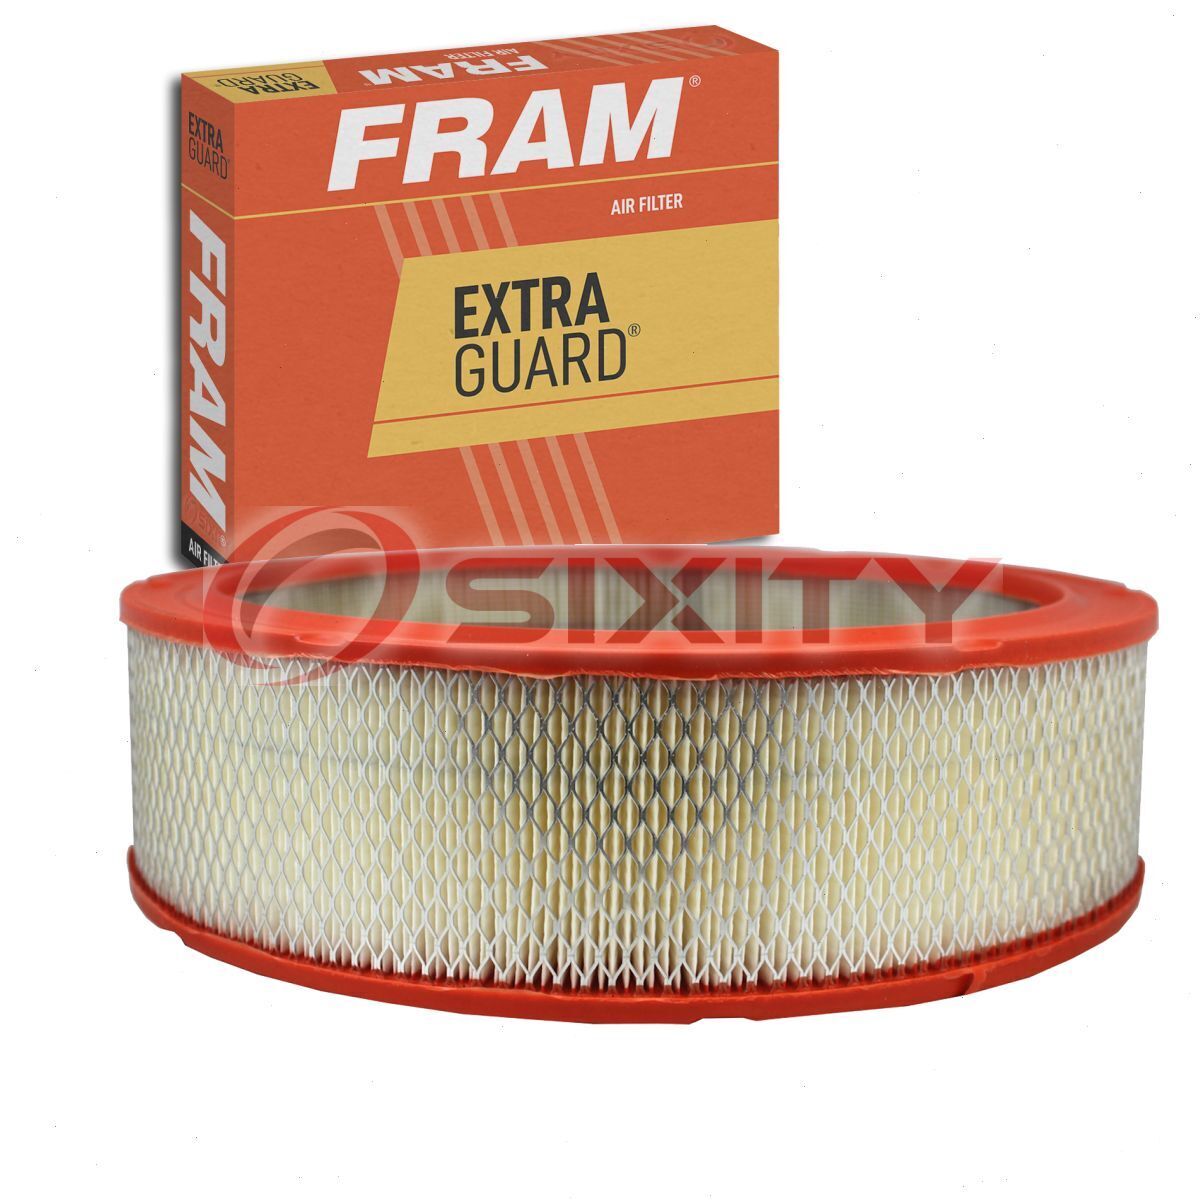 FRAM Extra Guard Air Filter for 1975-1979 Buick Skylark Intake Inlet gc